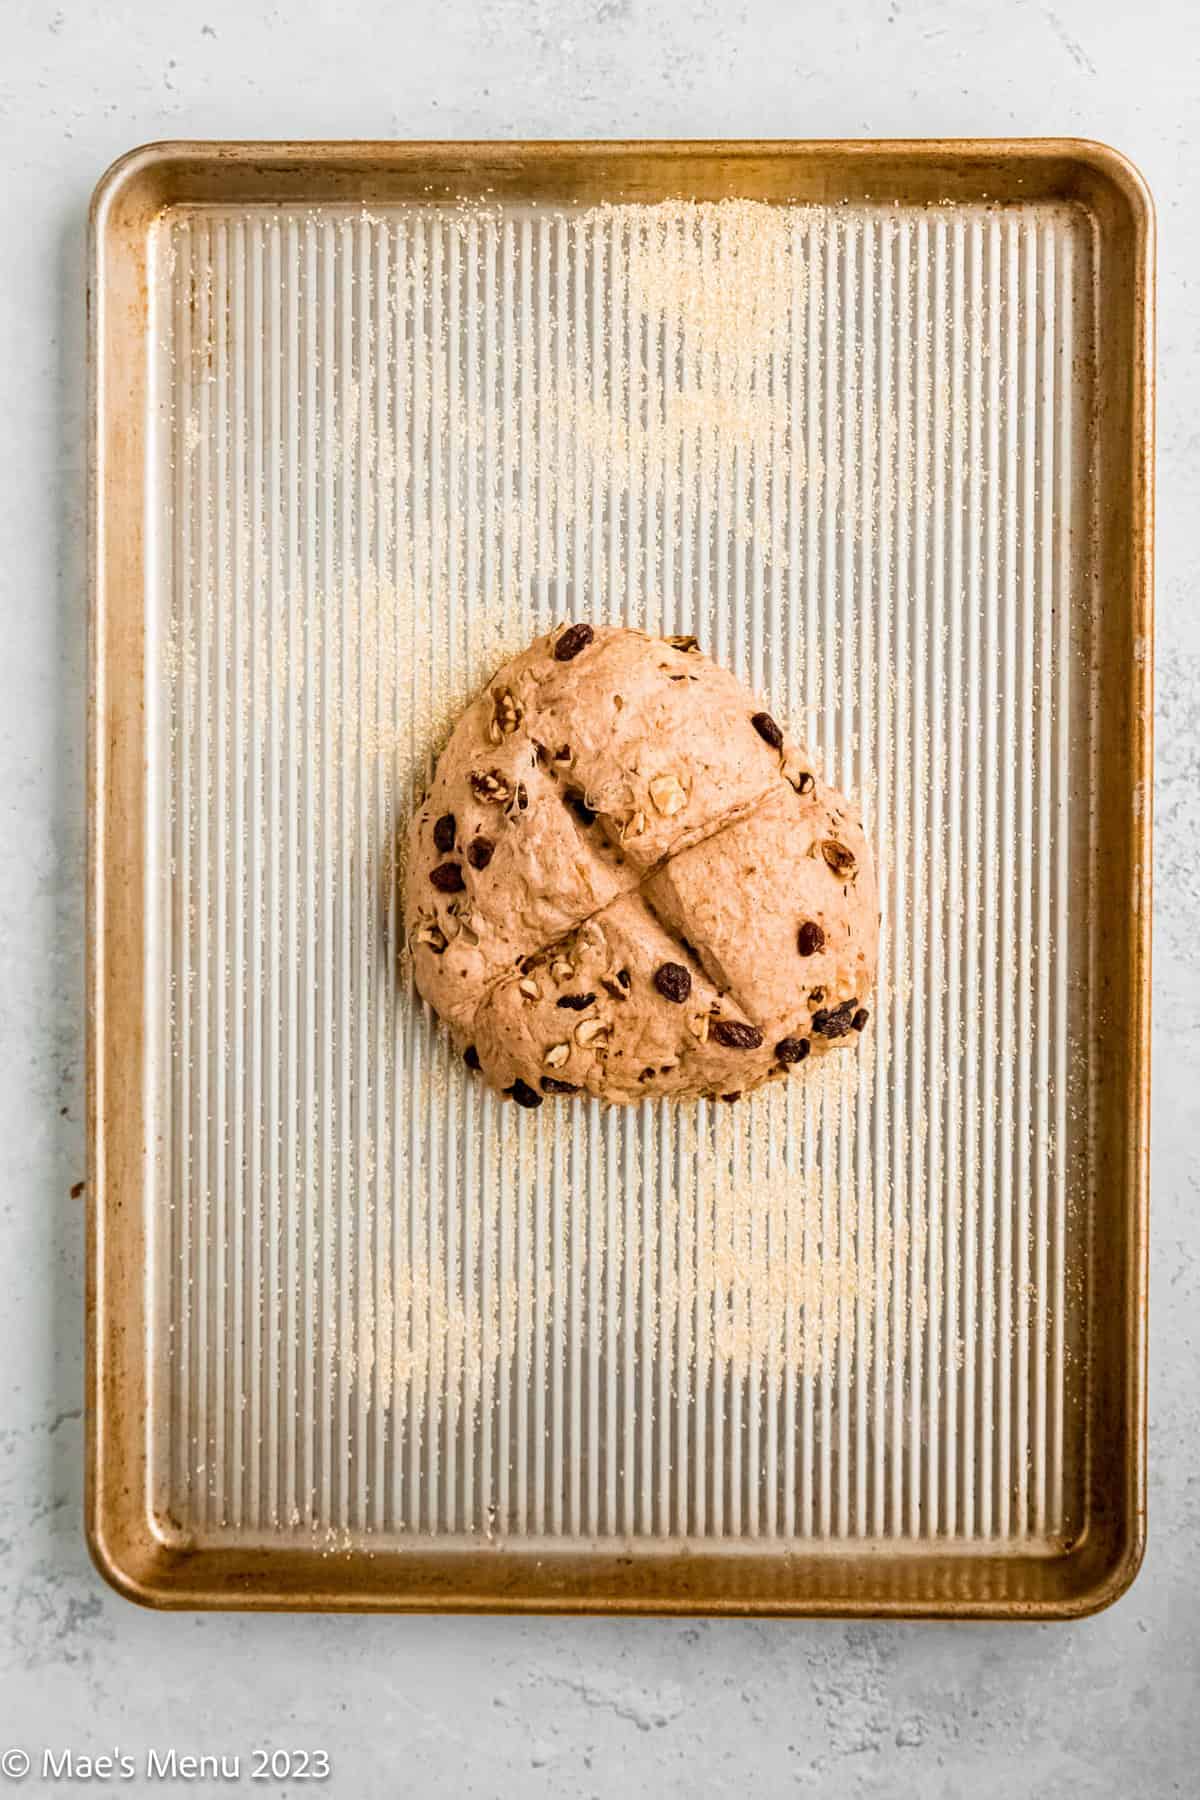 The ball of walnut dough scored on a prepared baking sheet.